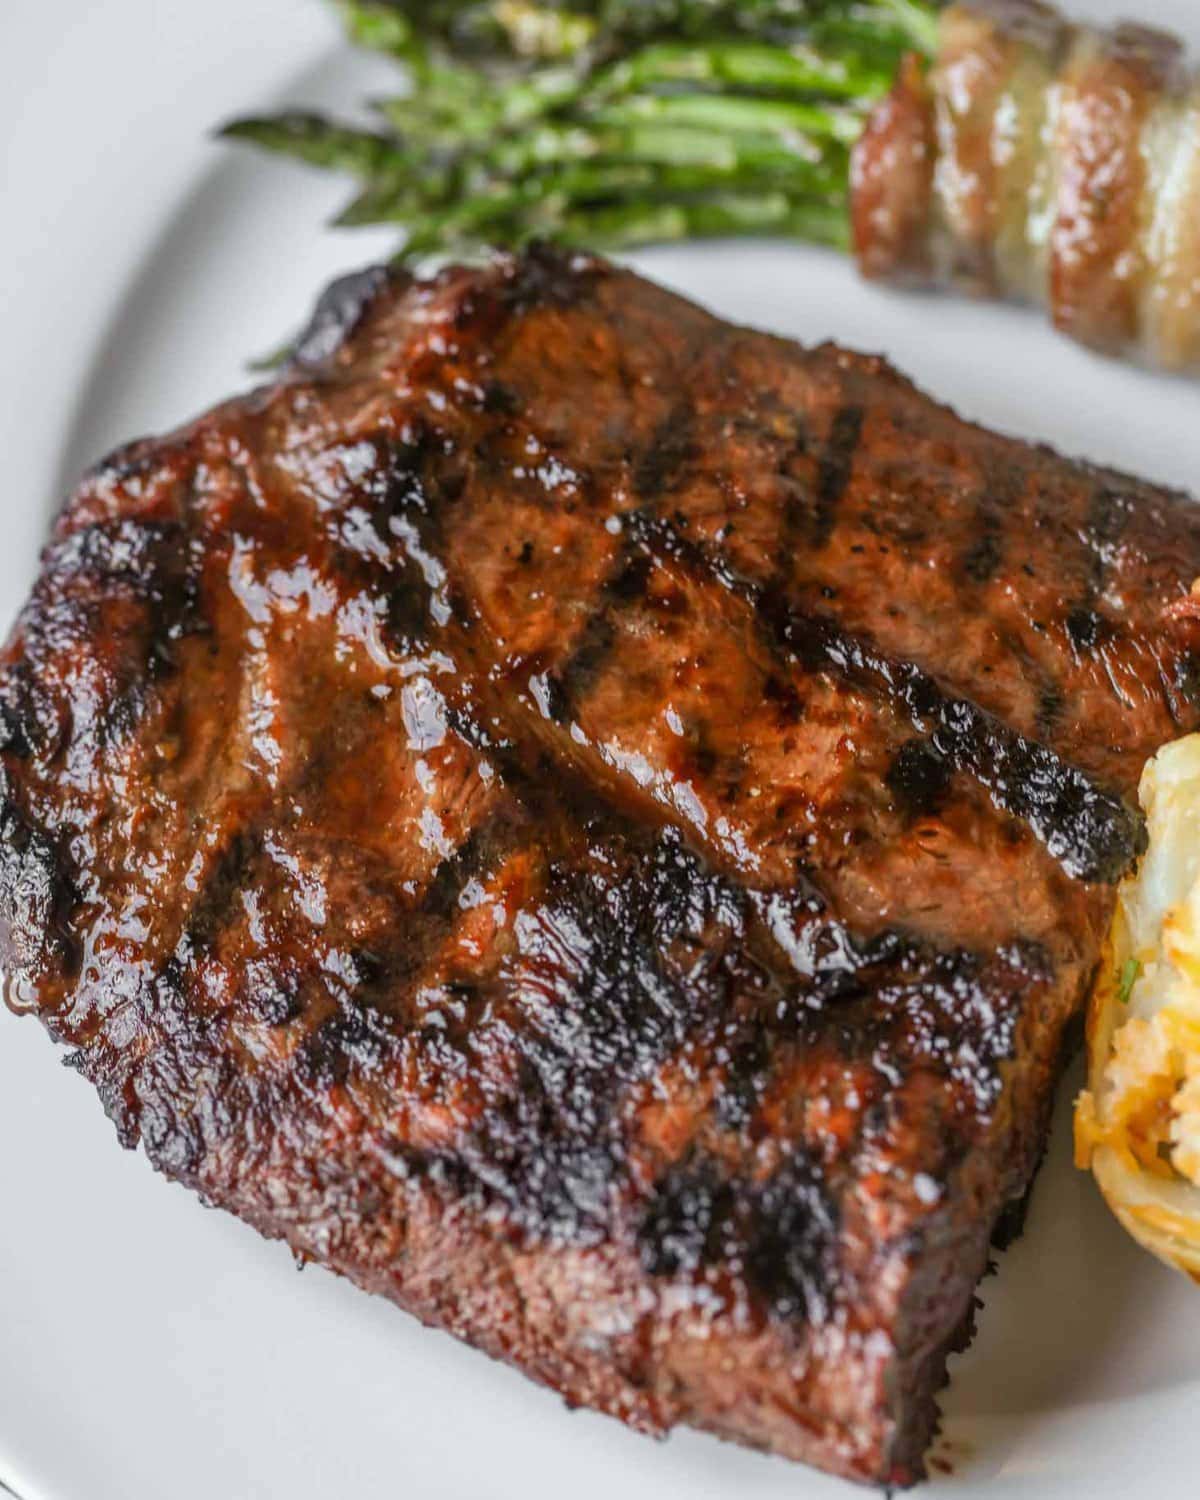 Best steak marinade - steak on plate